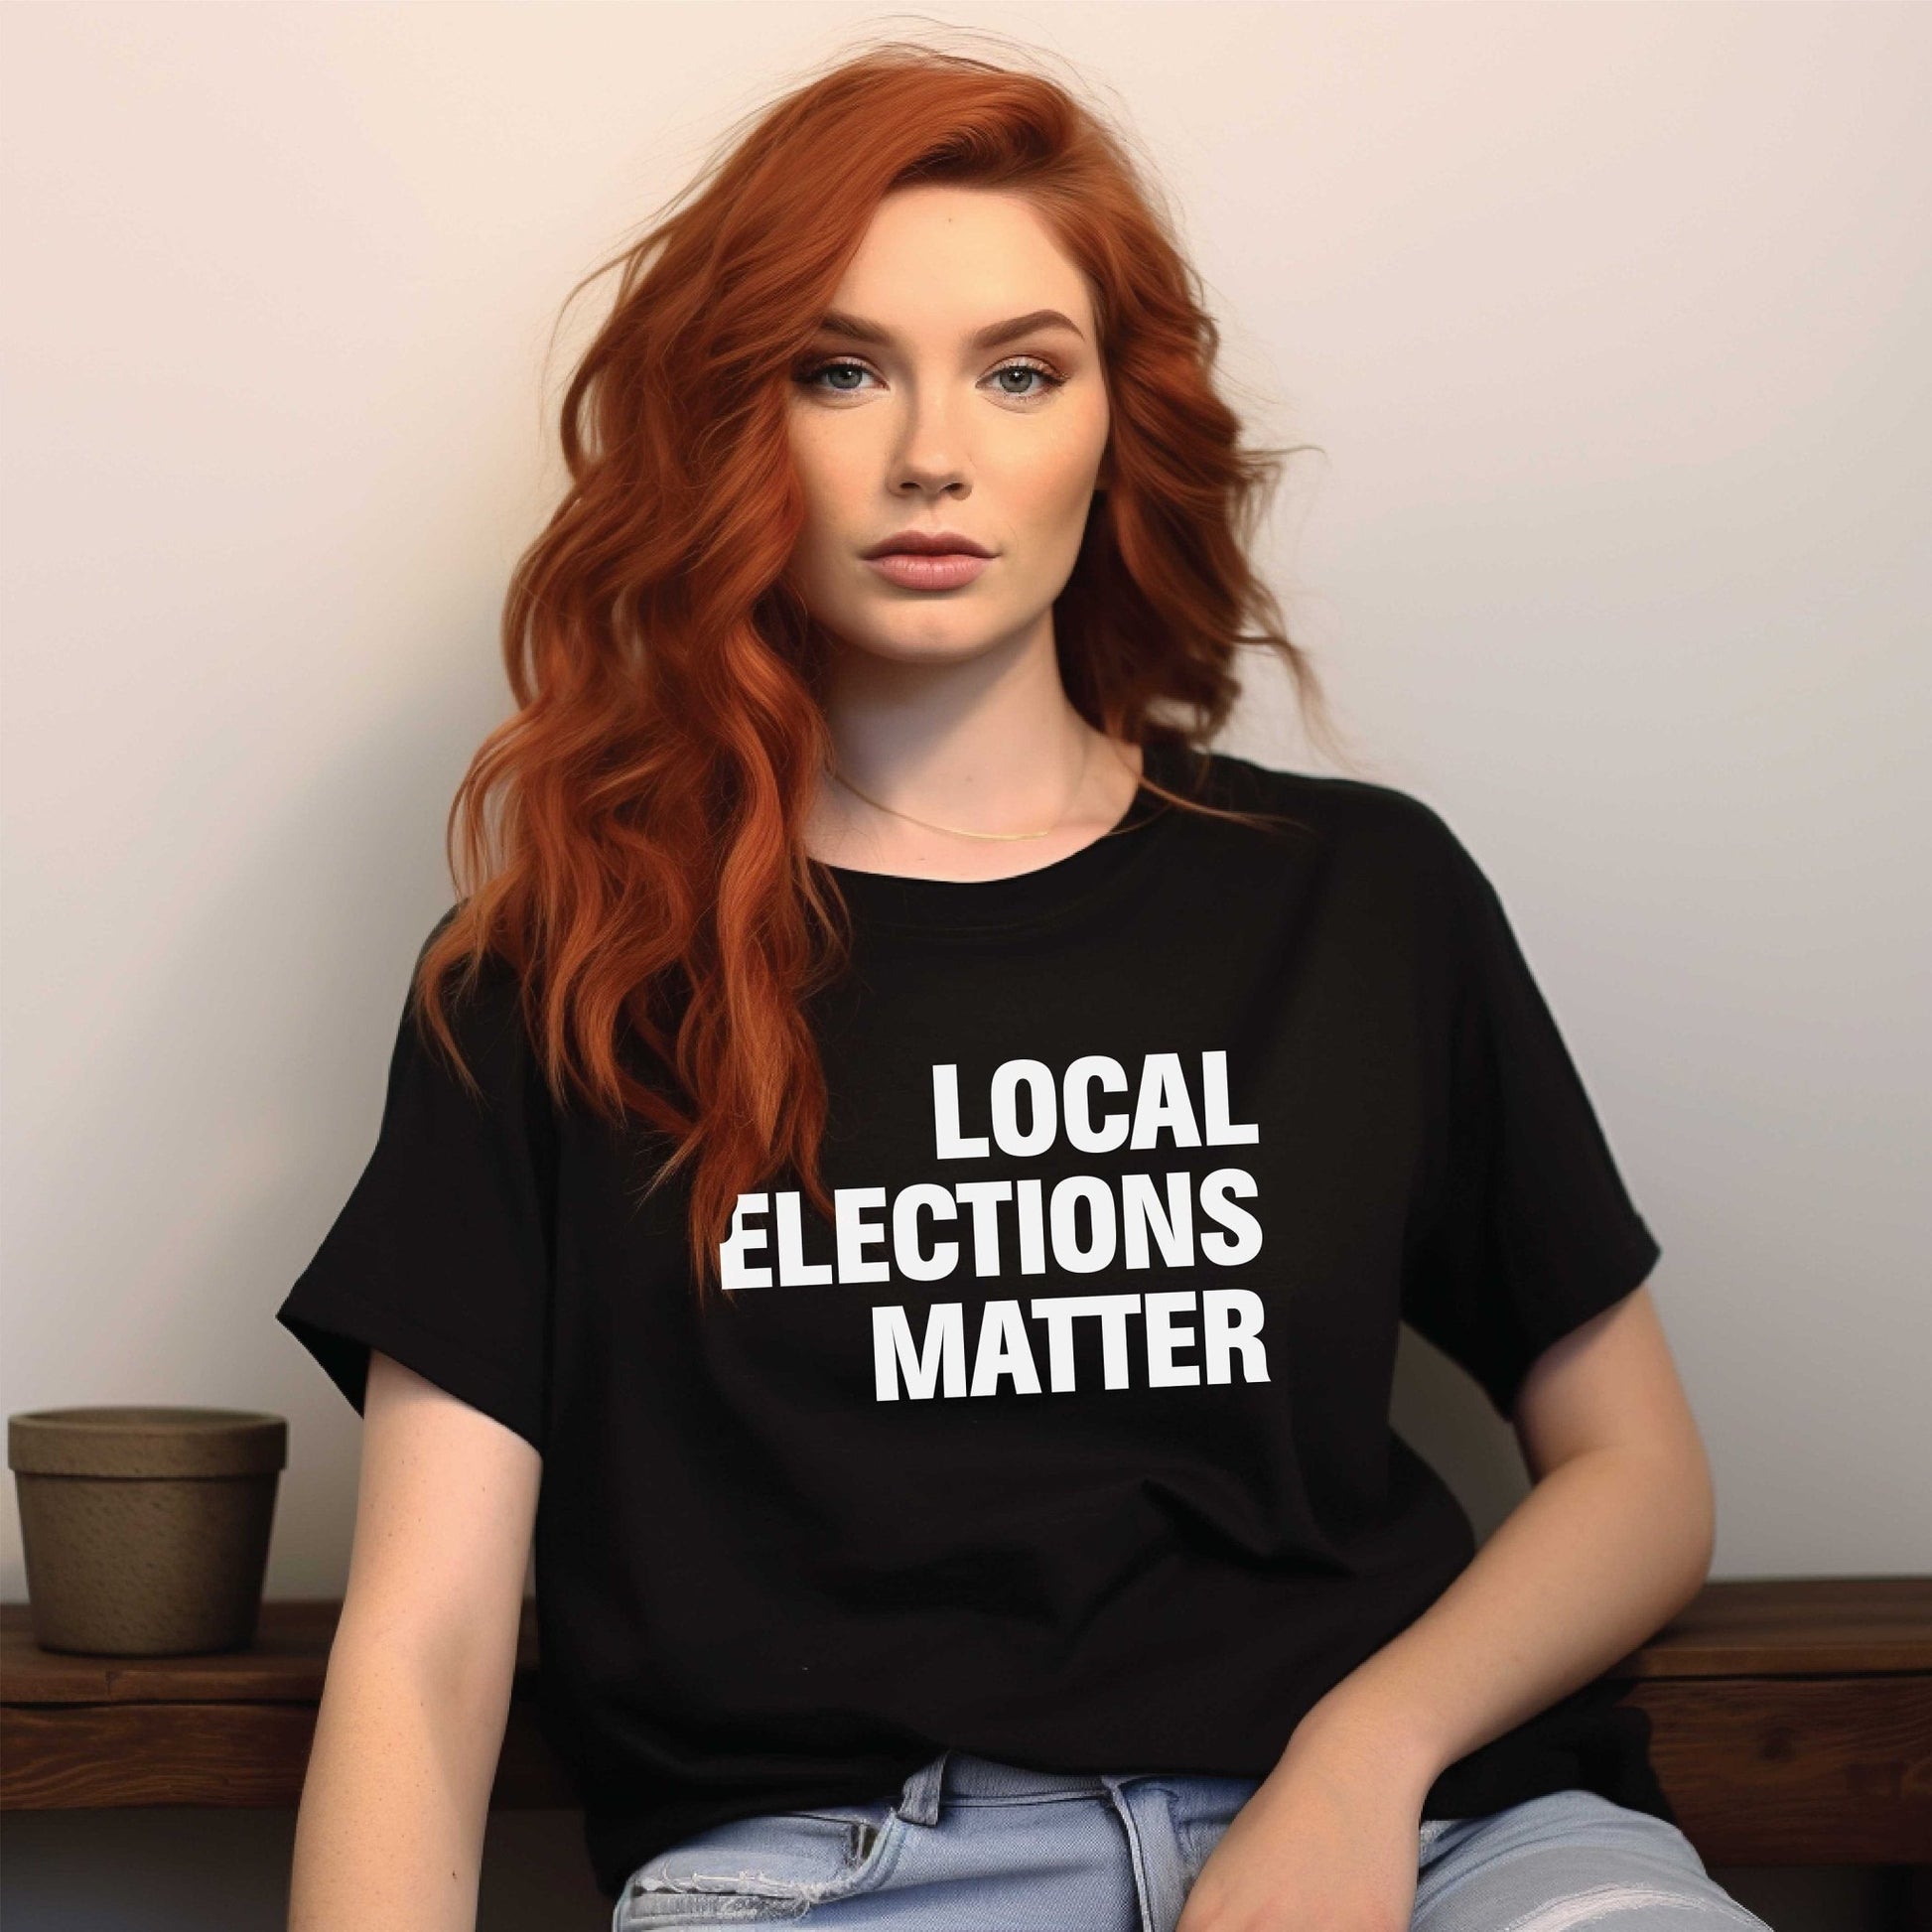 2024 Election Voting shirt, Local Elections Matter, Vote Red, Vote blue, political shirt - SBS T Shop